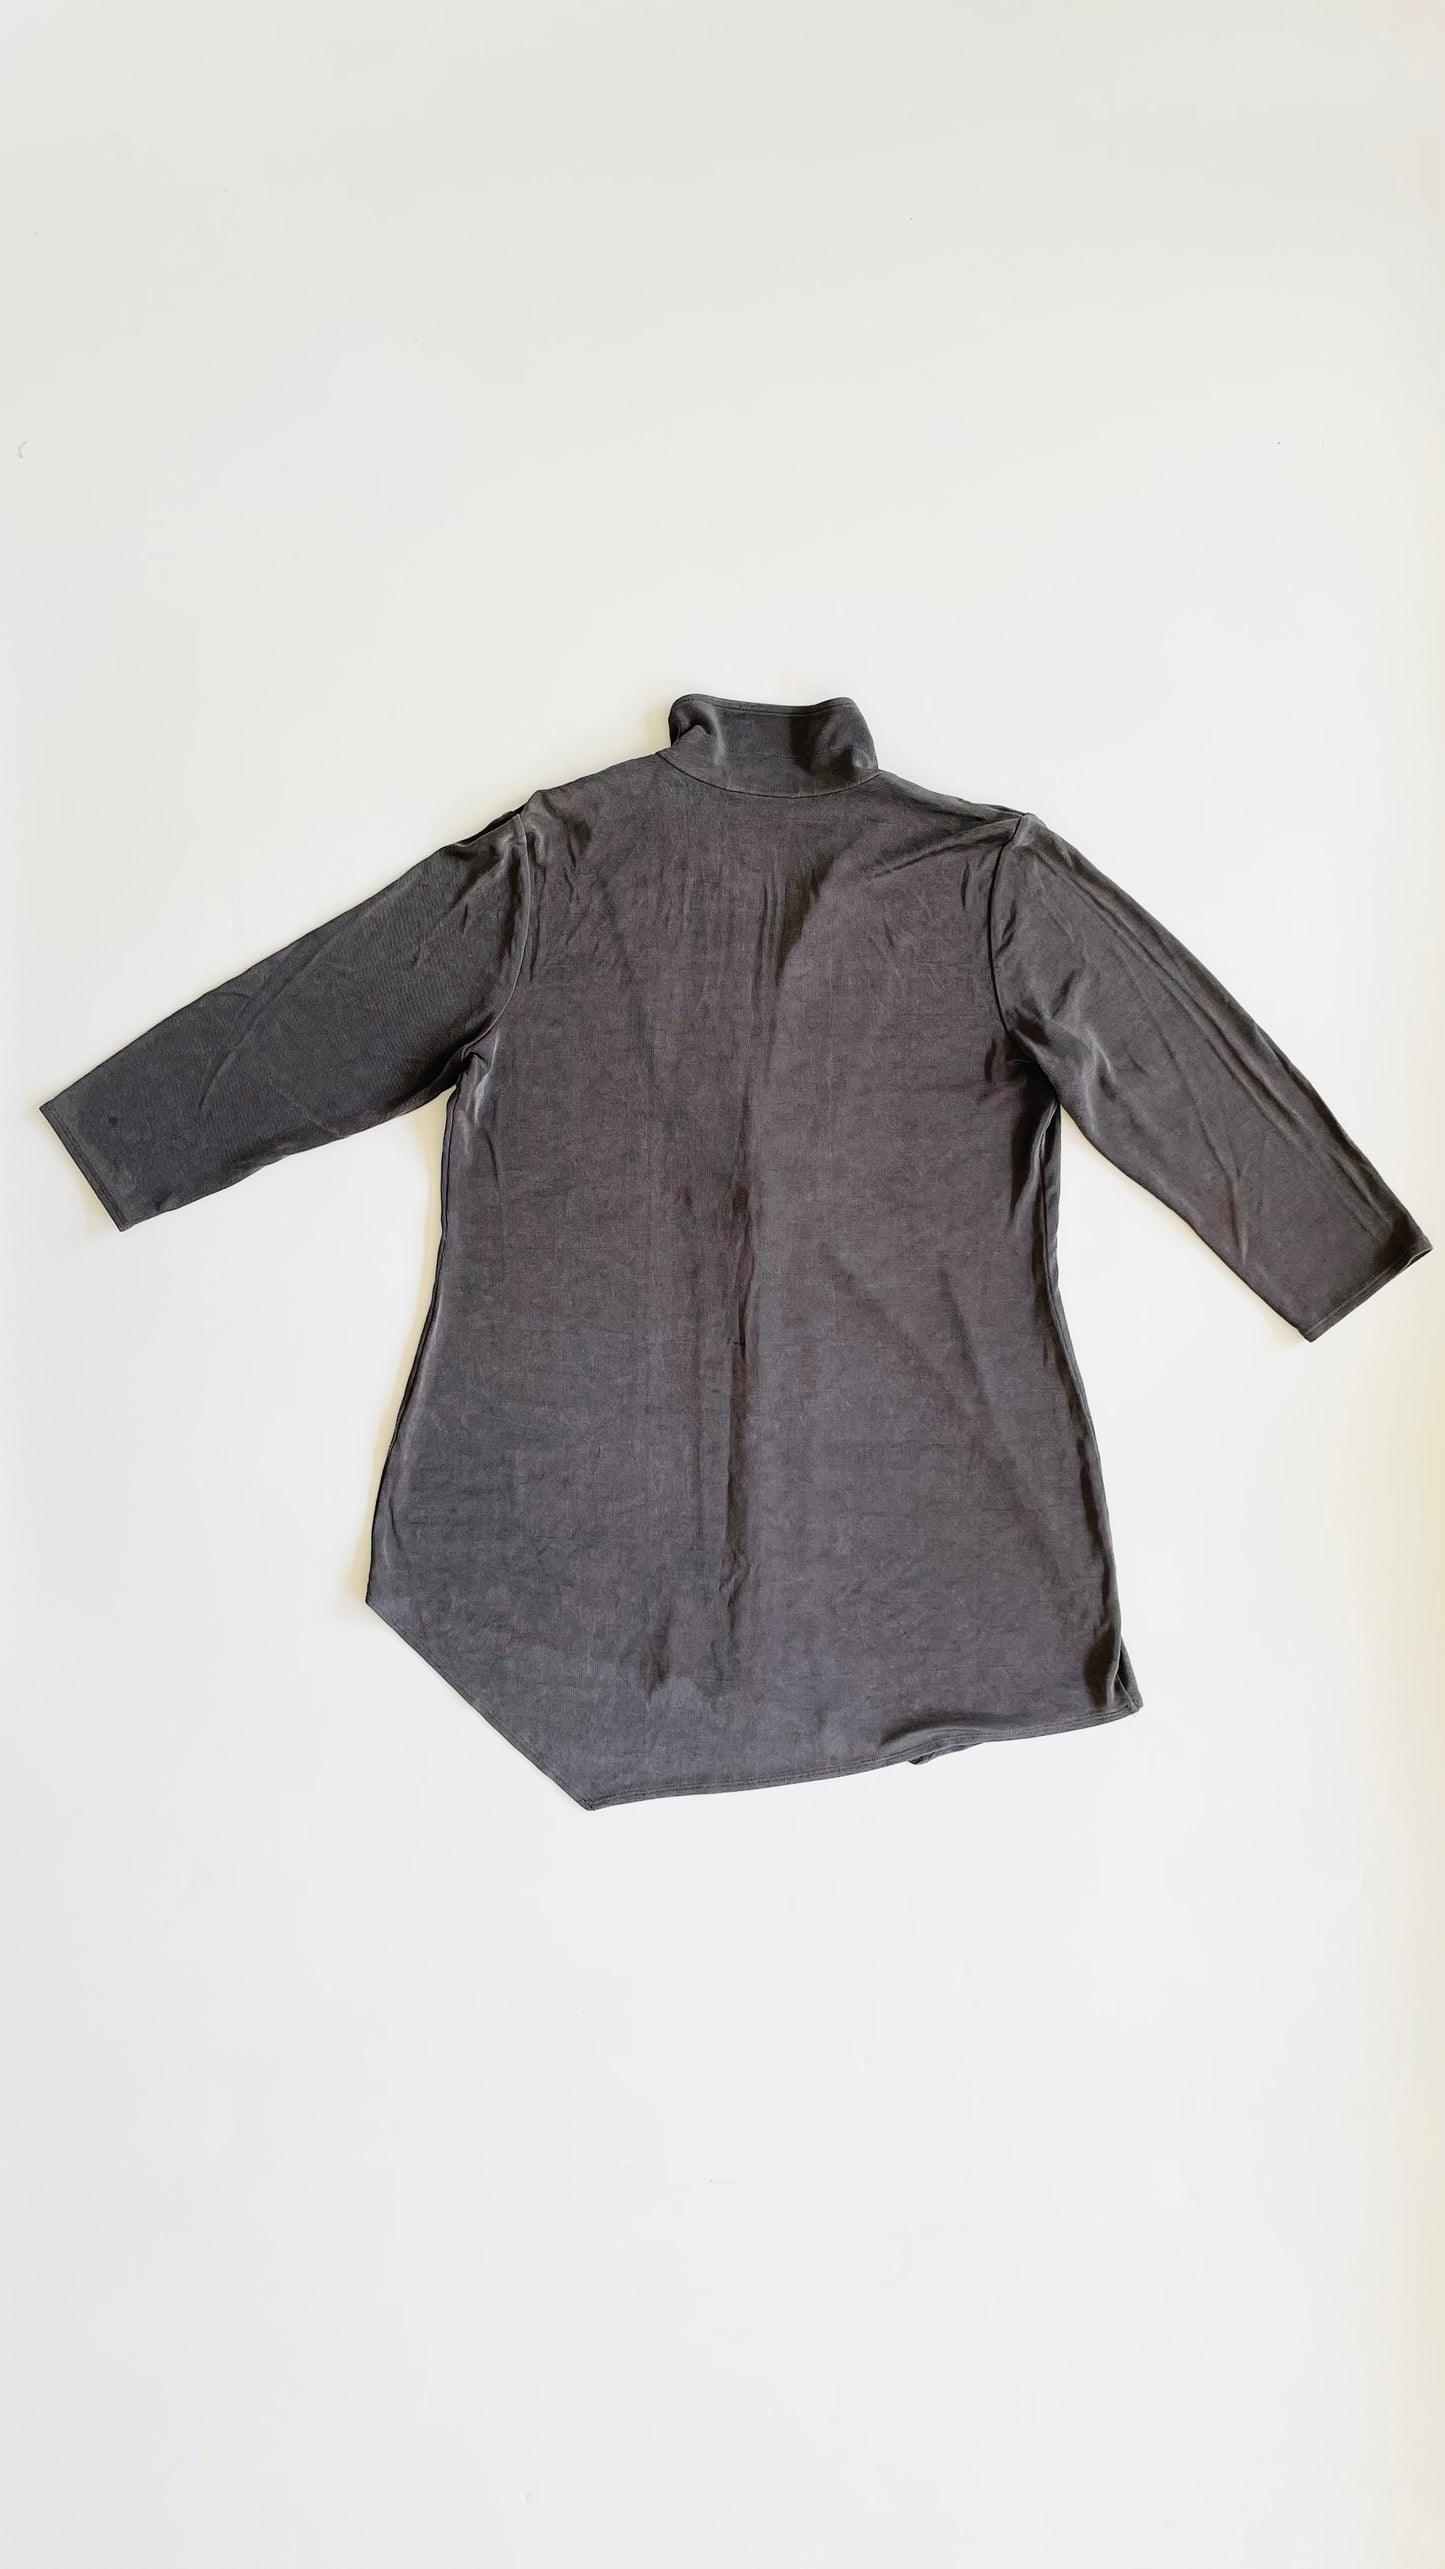 Vintage 90s grey asymmetrical knit cardigan - Size L